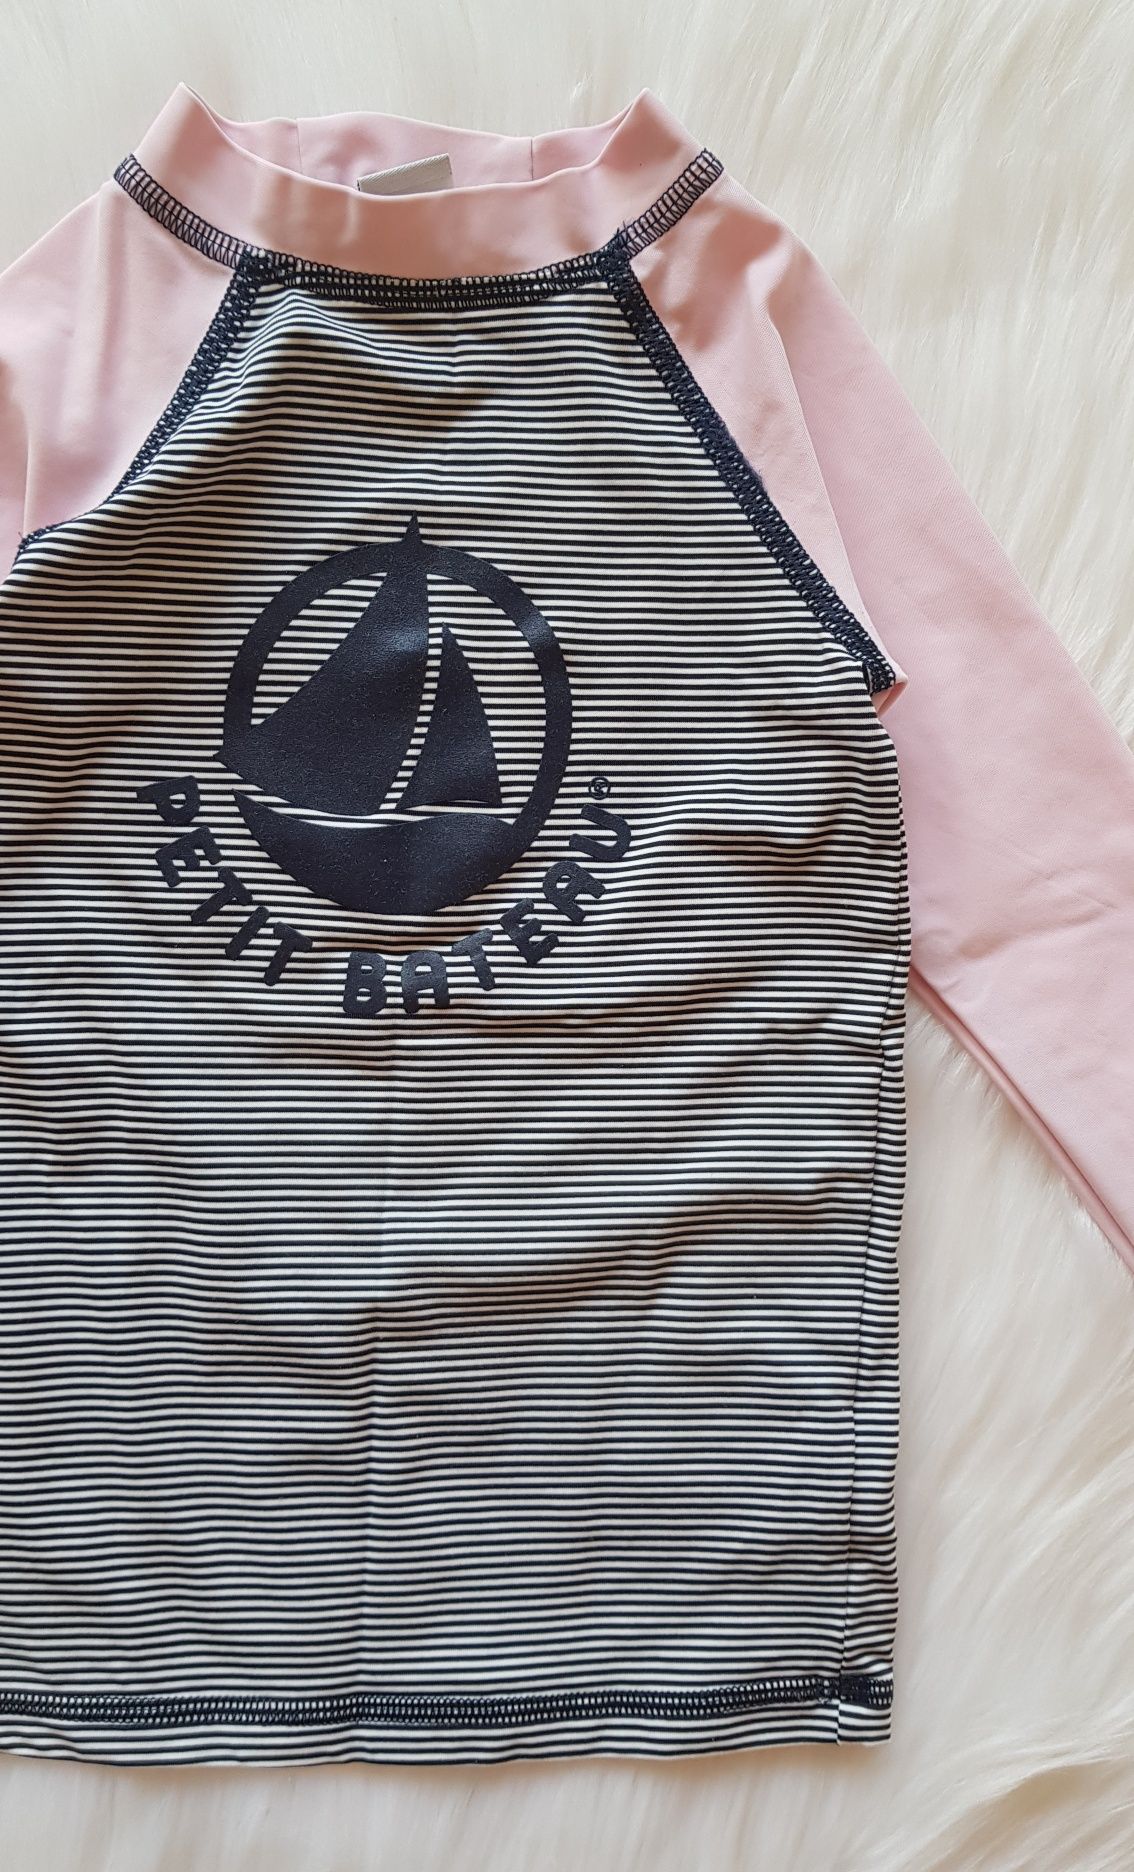 Koszulka UV 92 Petit bateau paski róż kąpielowa